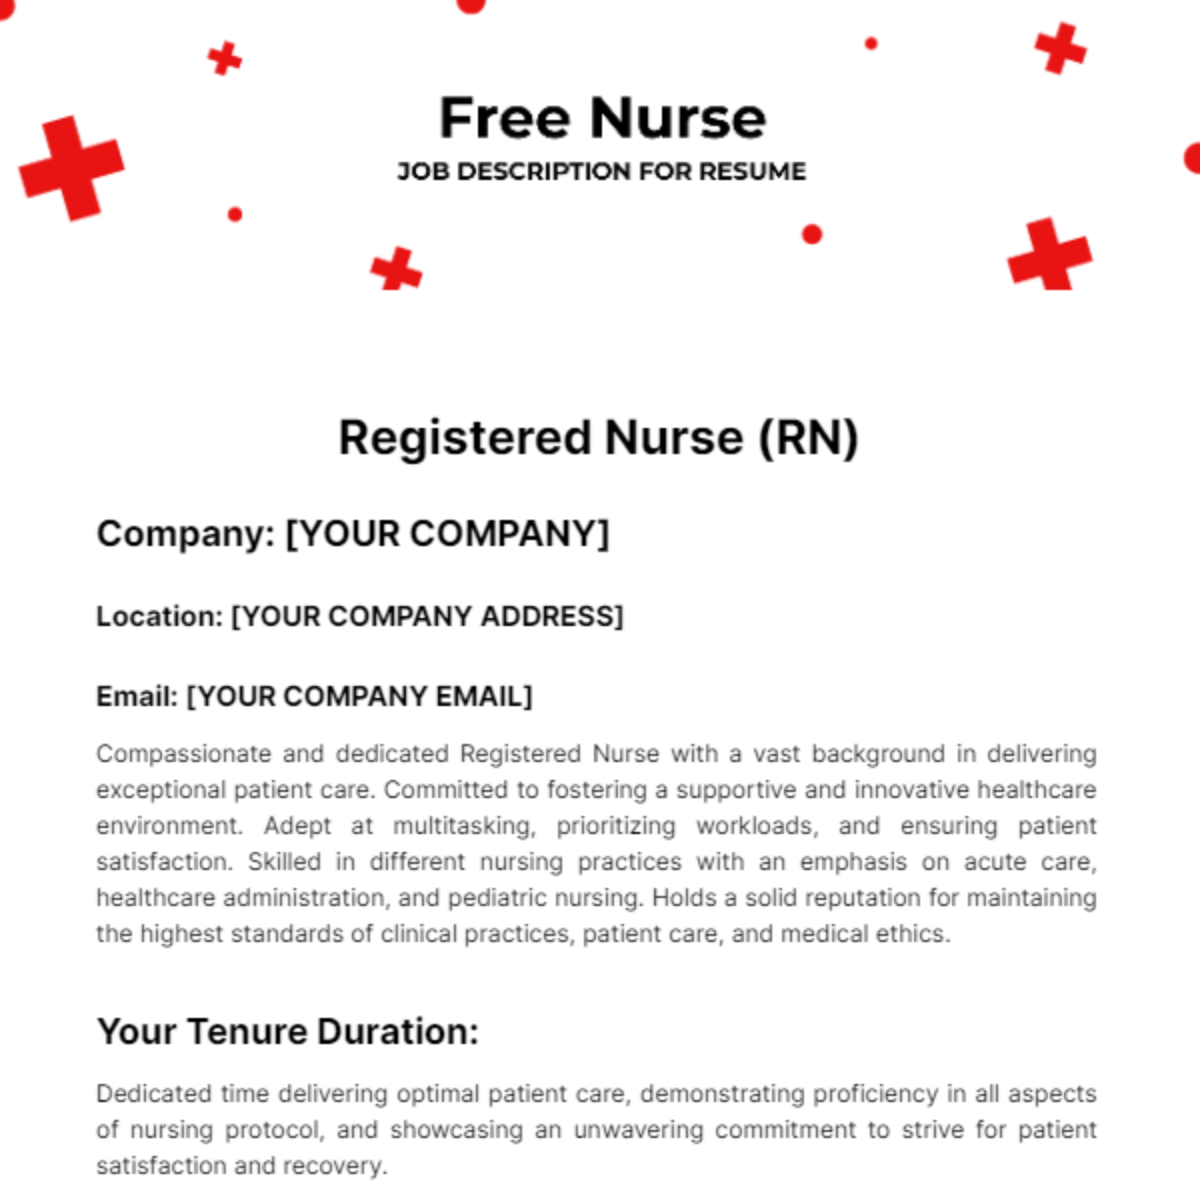 Free Nurse Job Description for Resume Template